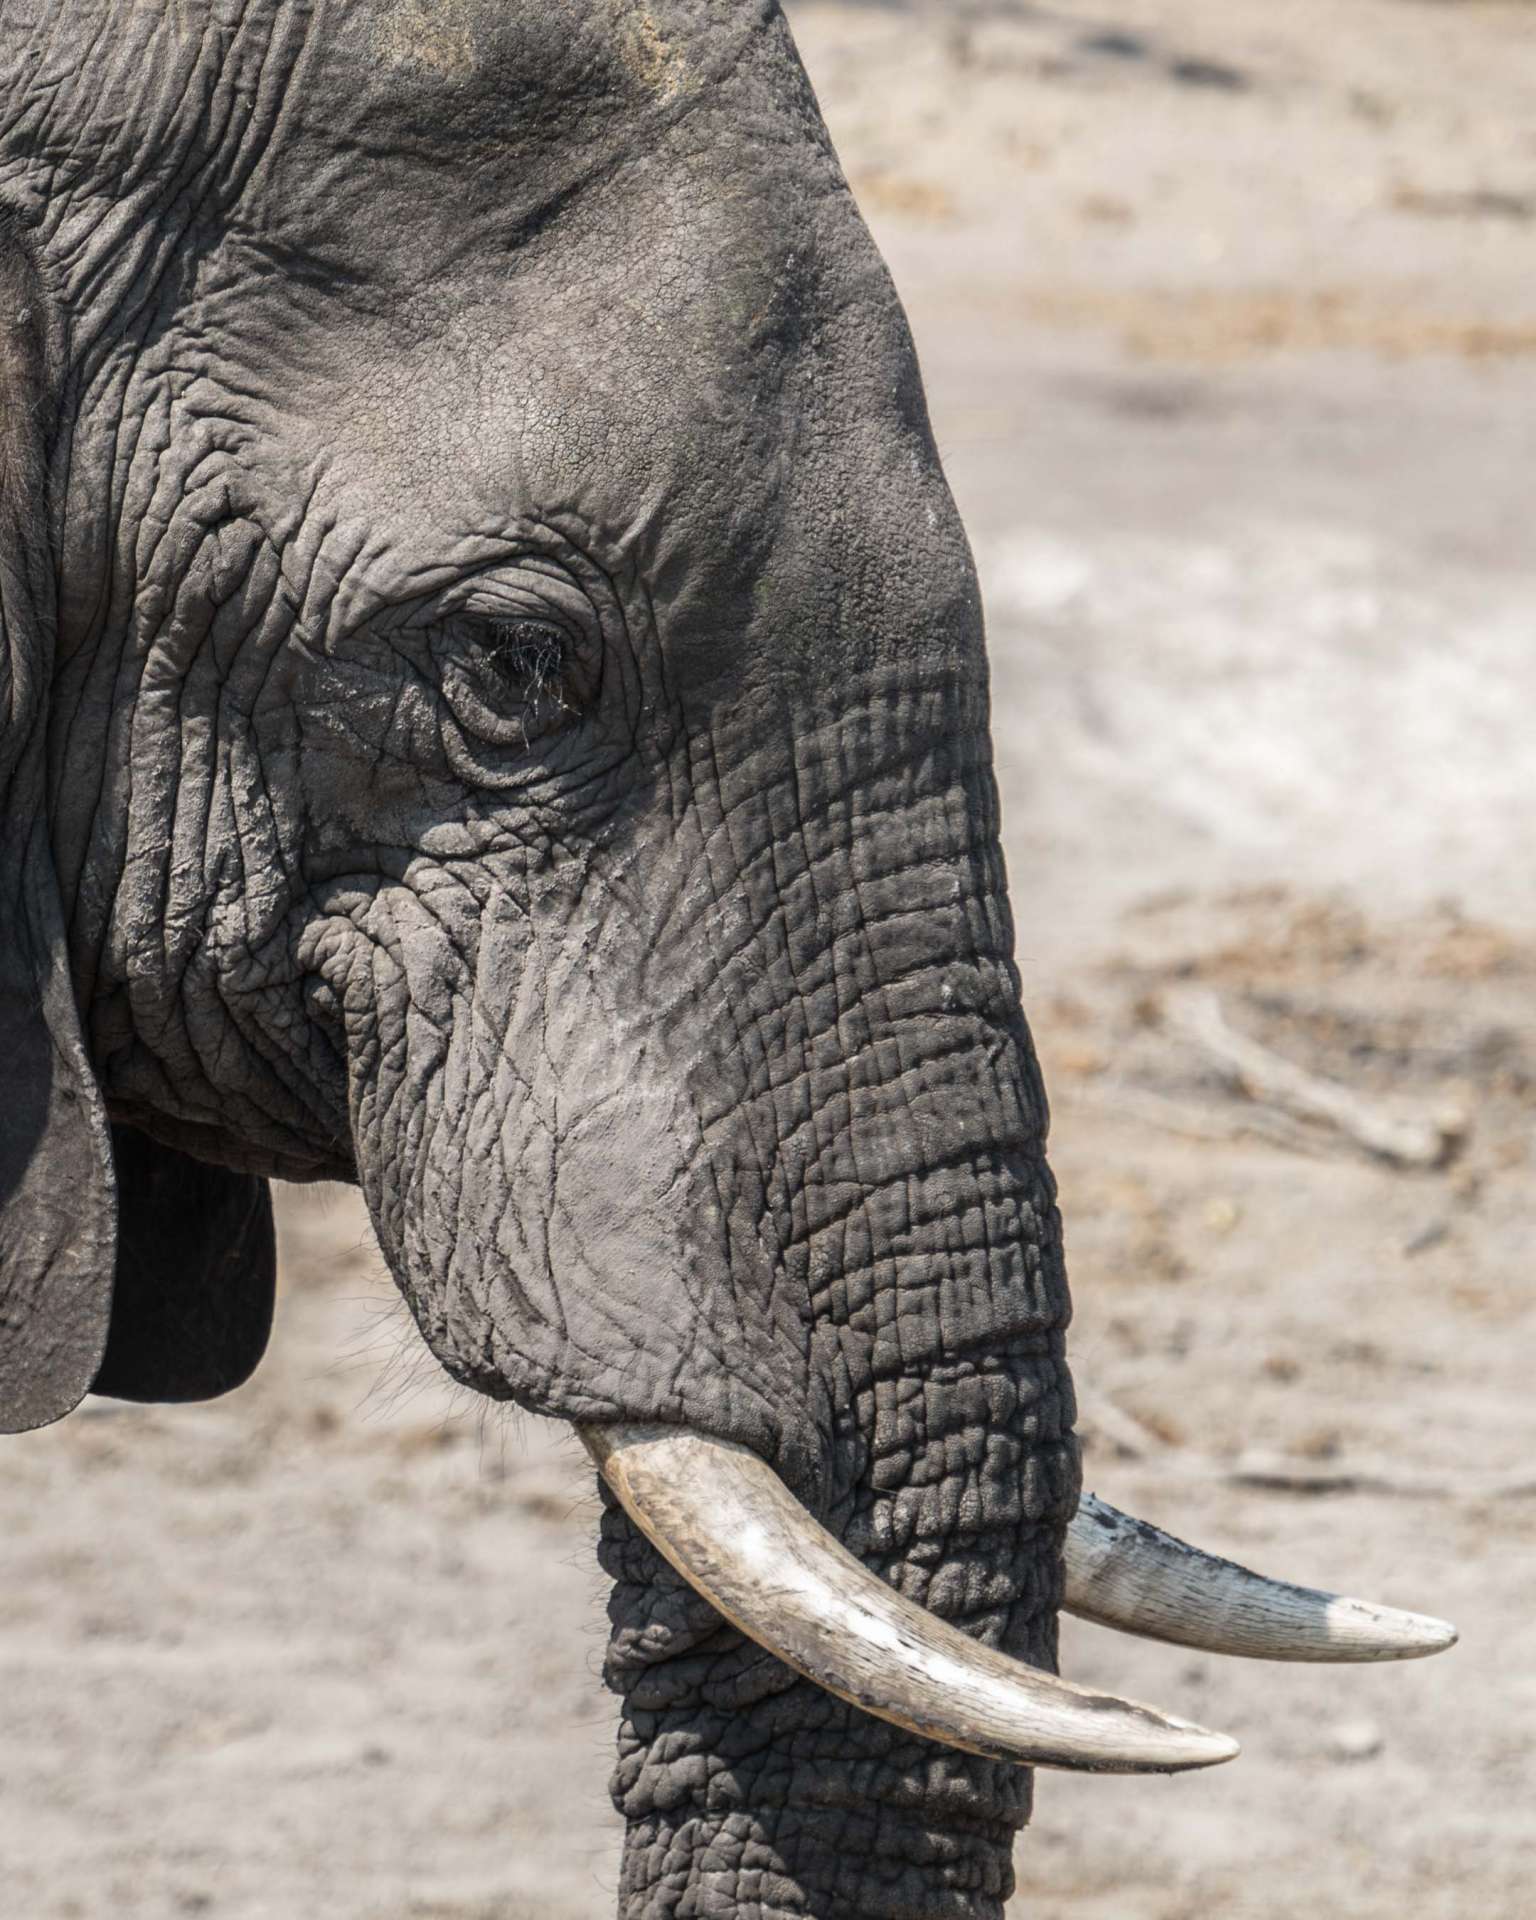 Victoria Falls Zimbawe Enrico Pescantini Chobe day trip elephant close up